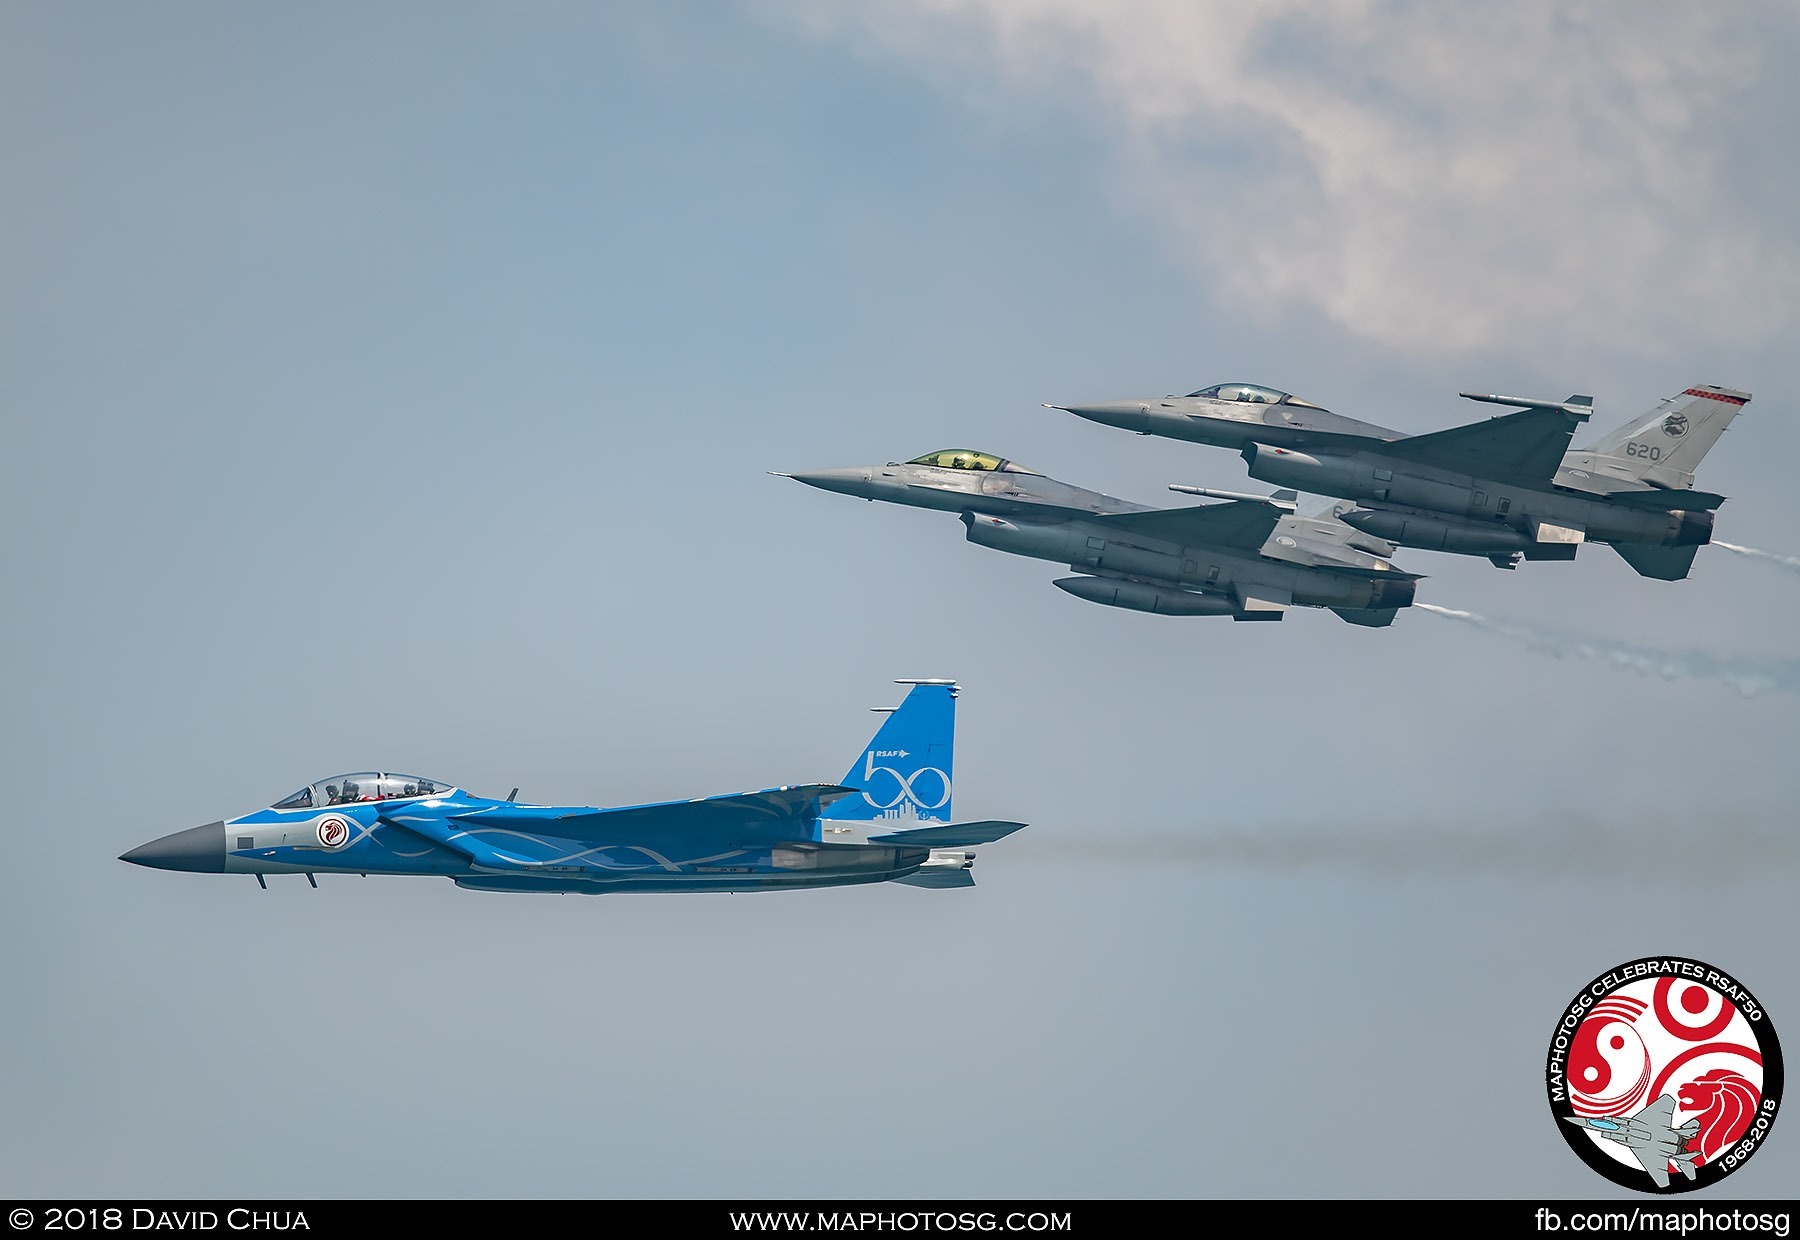 Two F-16s break formation for the Vertical Split.